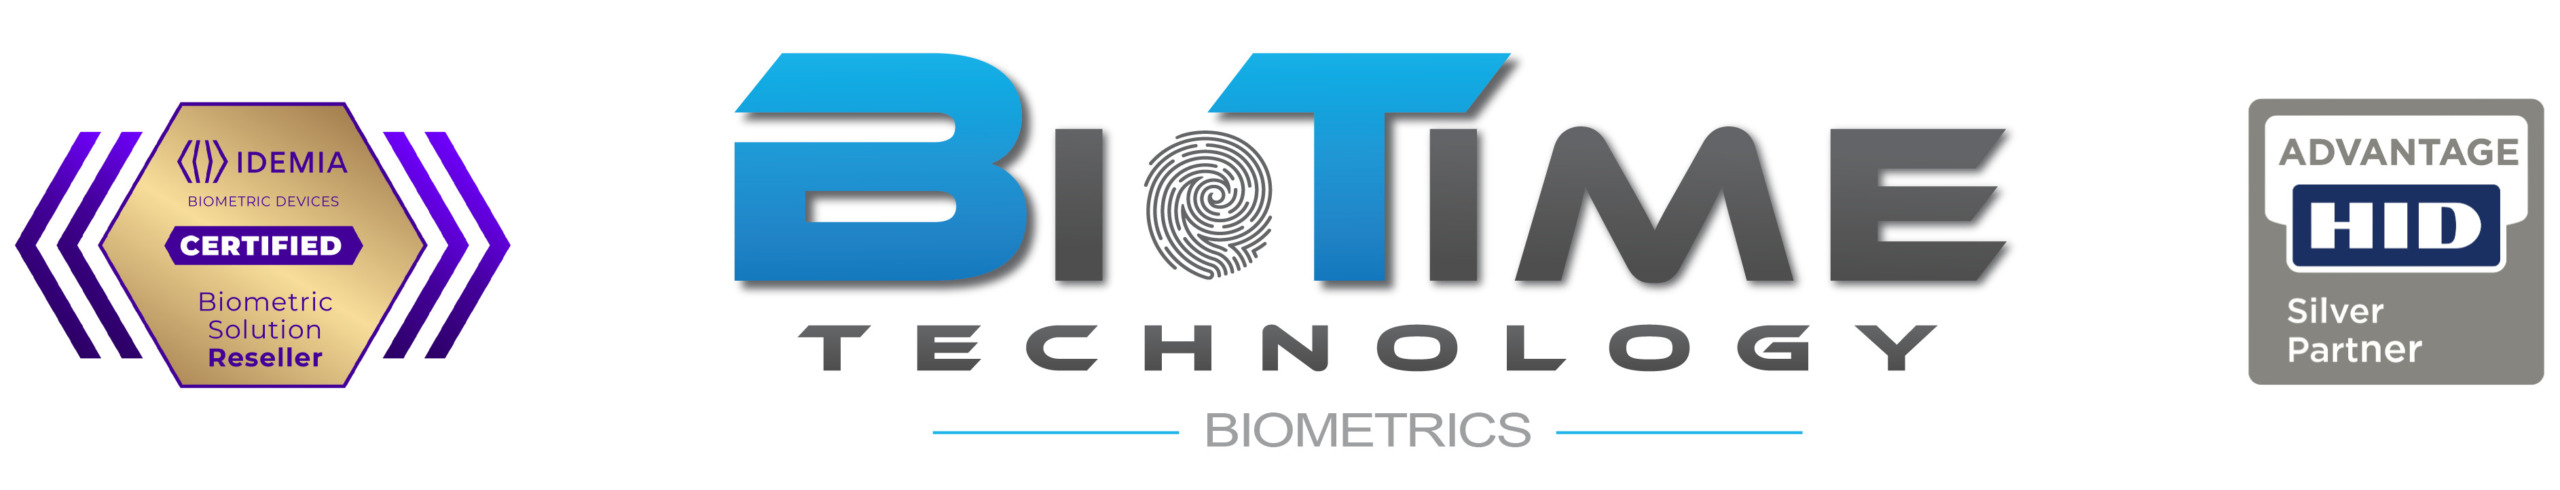 Biotime Technology